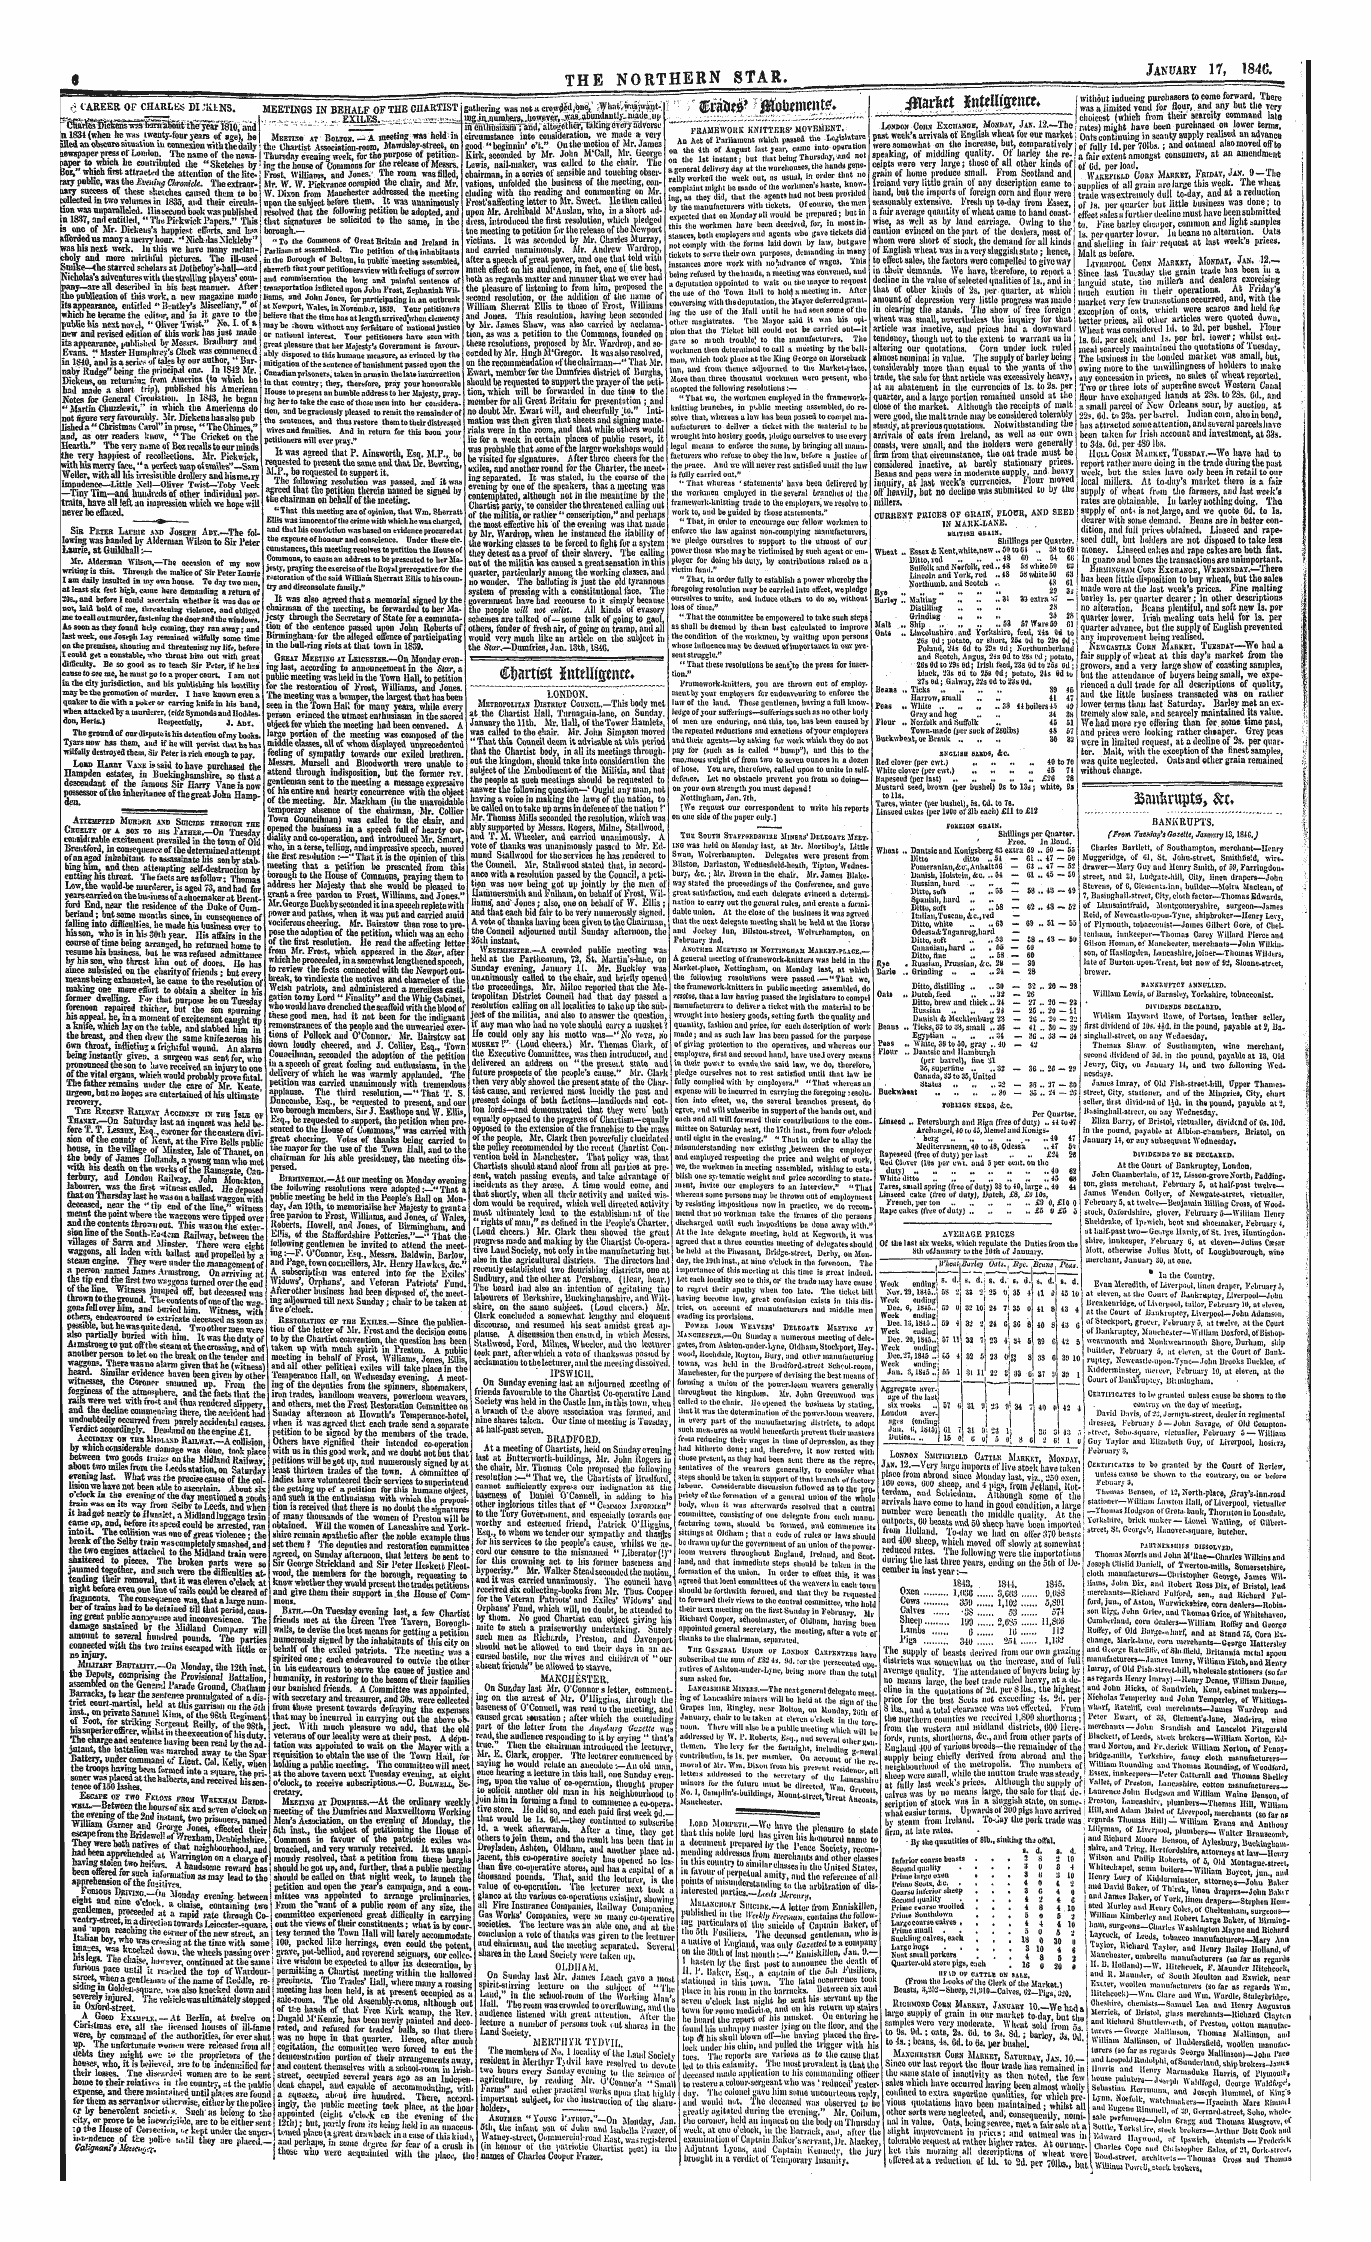 Northern Star (1837-1852): jS F Y, 1st edition - Ctartfet Jntrtligence